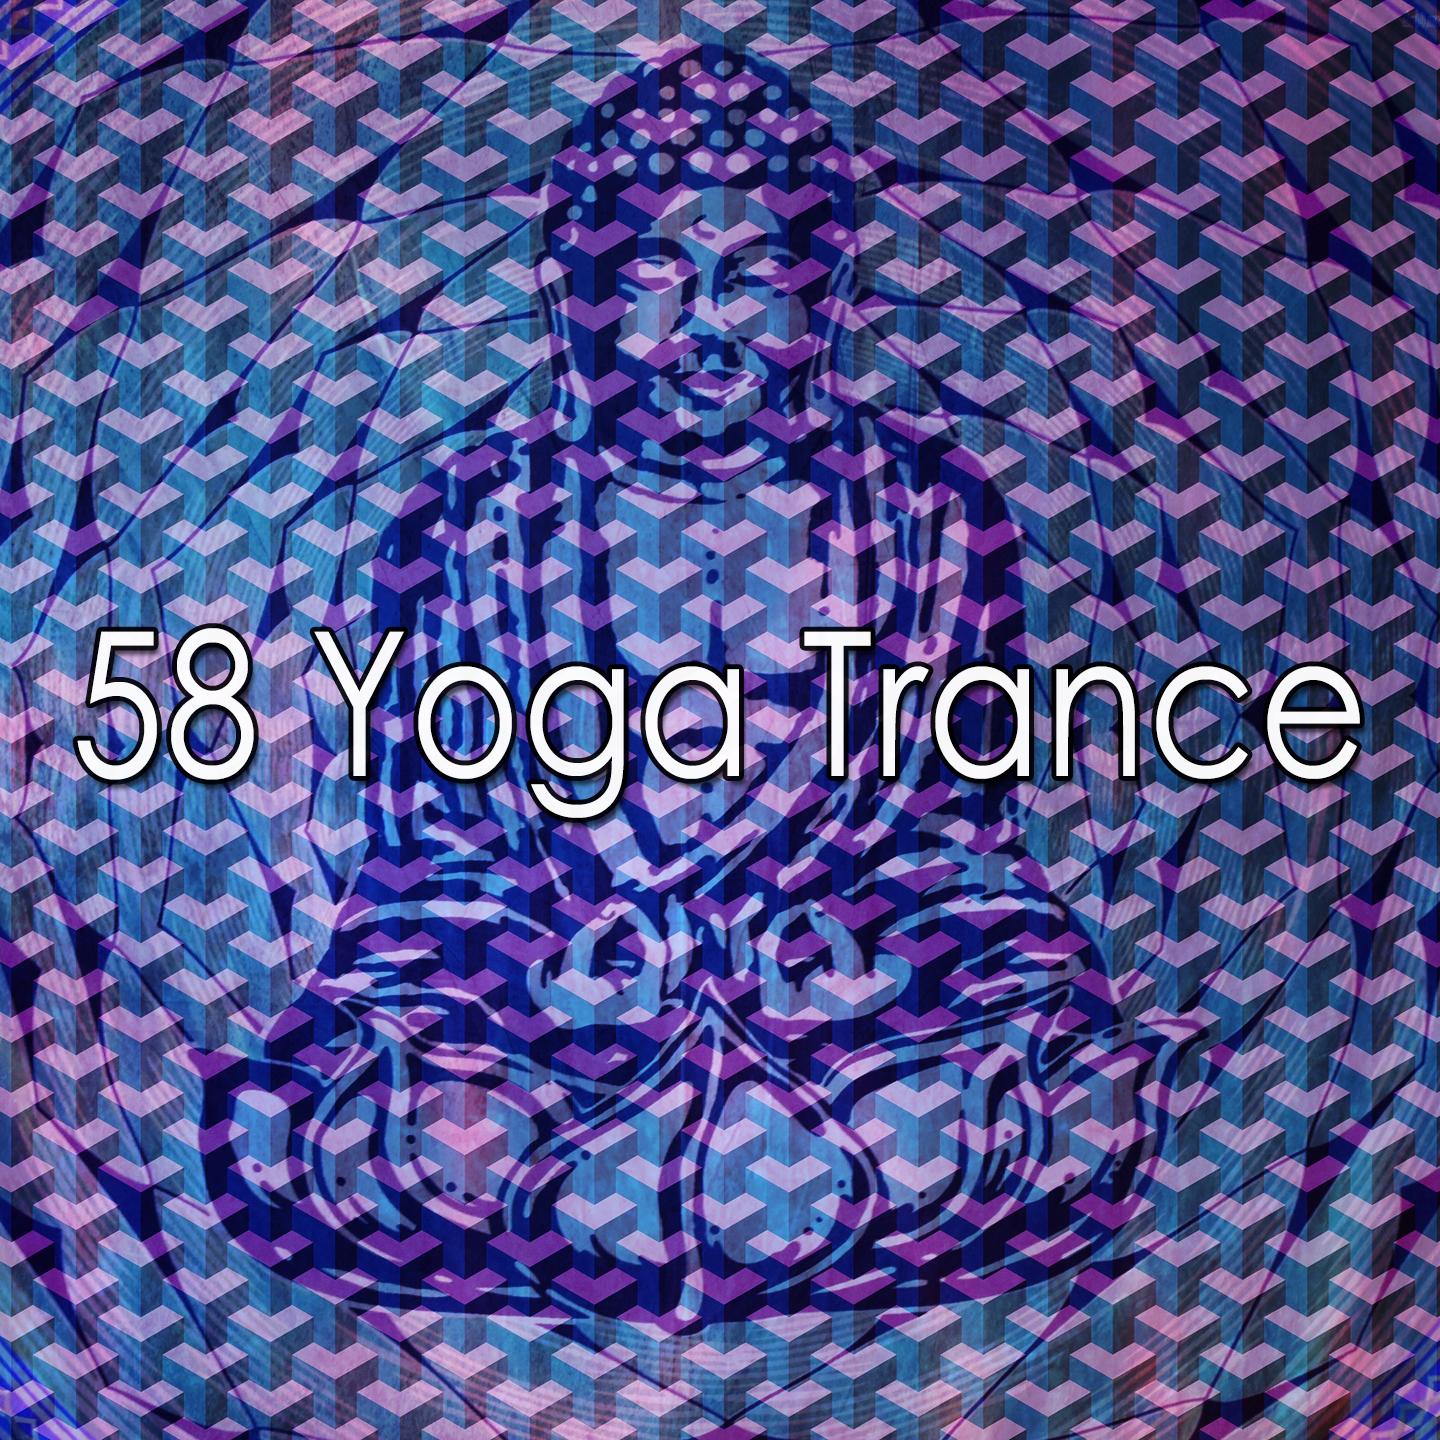 58 Yoga Trance